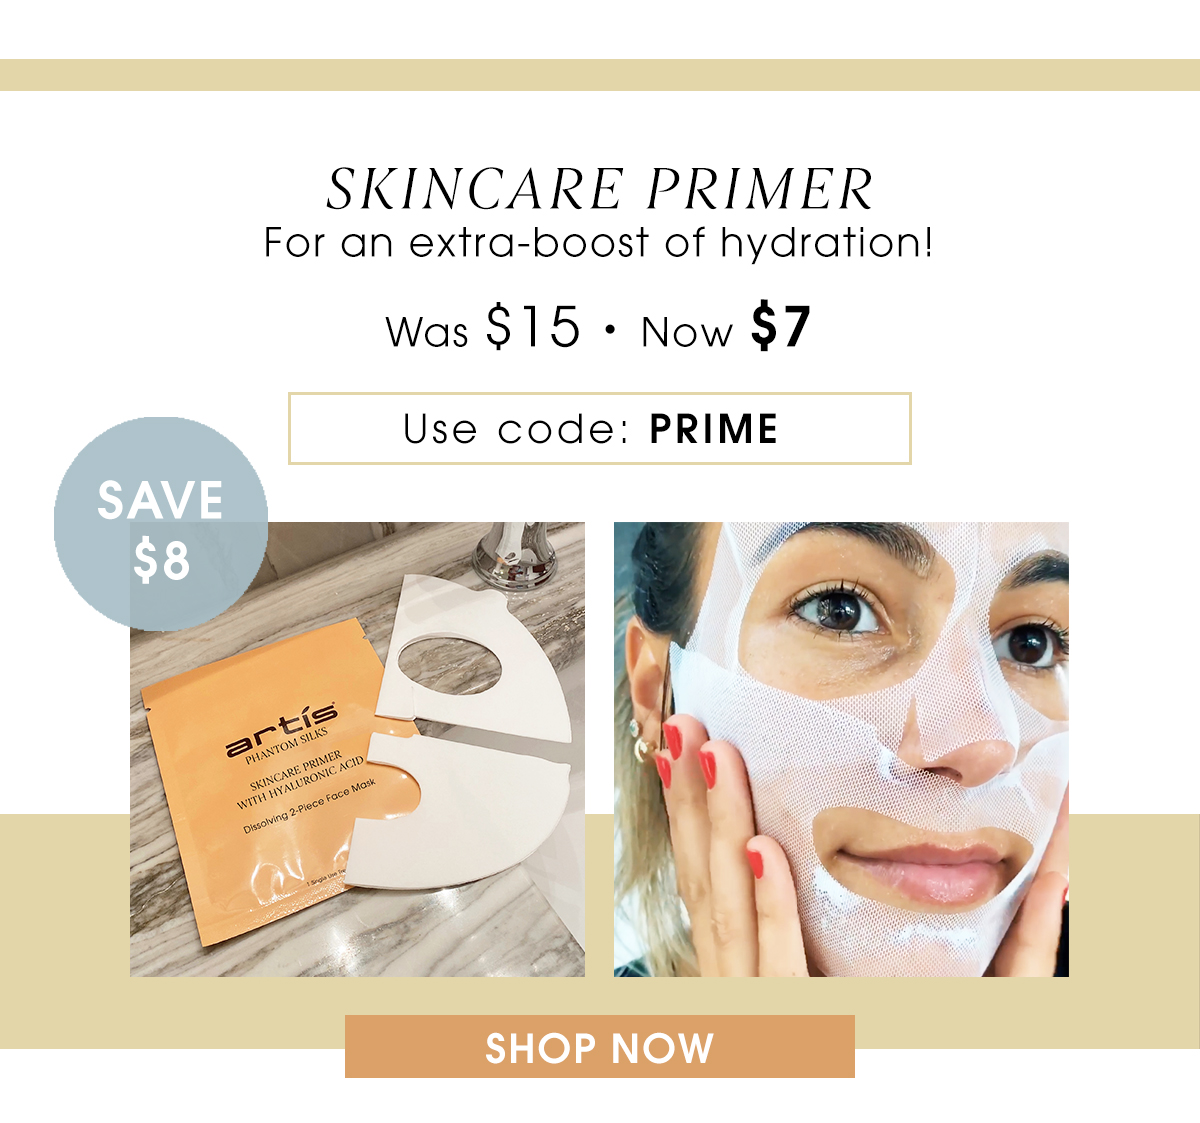 Skincare Primer, now $7 SHOP NOW